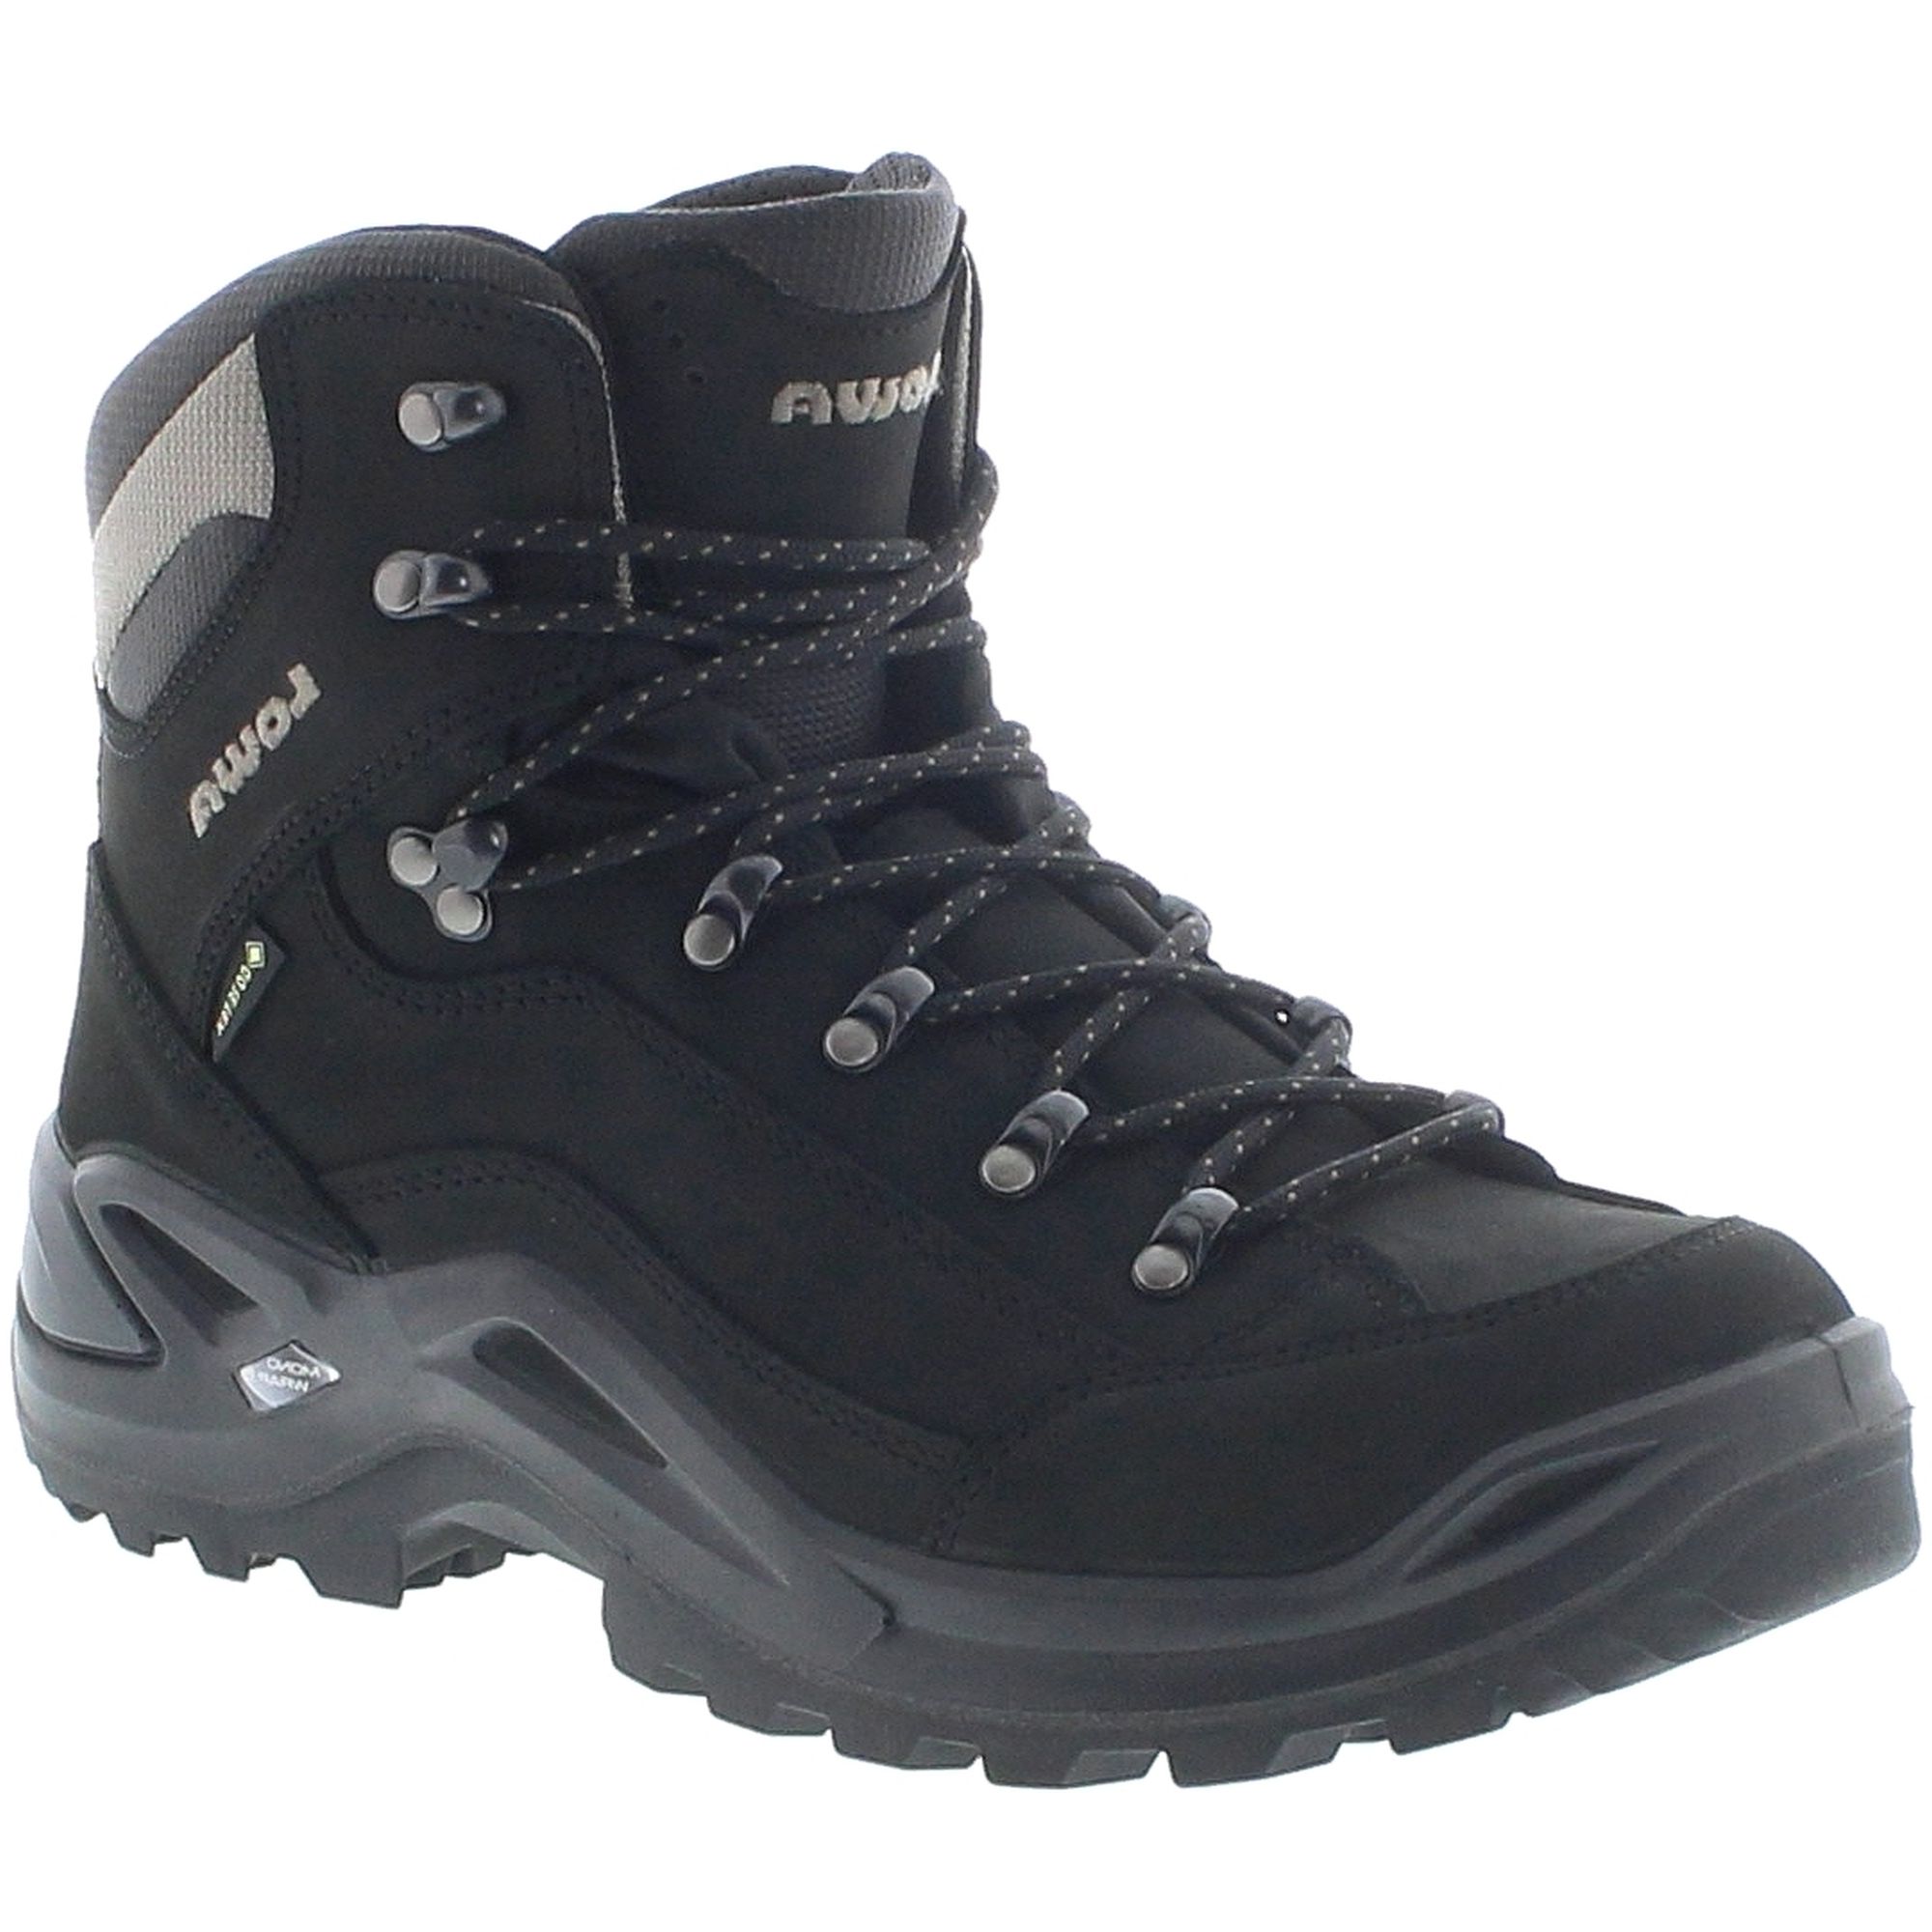 LOWA Renegade GTX Mid Men Gore-Tex Outdoor Hiking Schuhe schwarz 310945-9995 